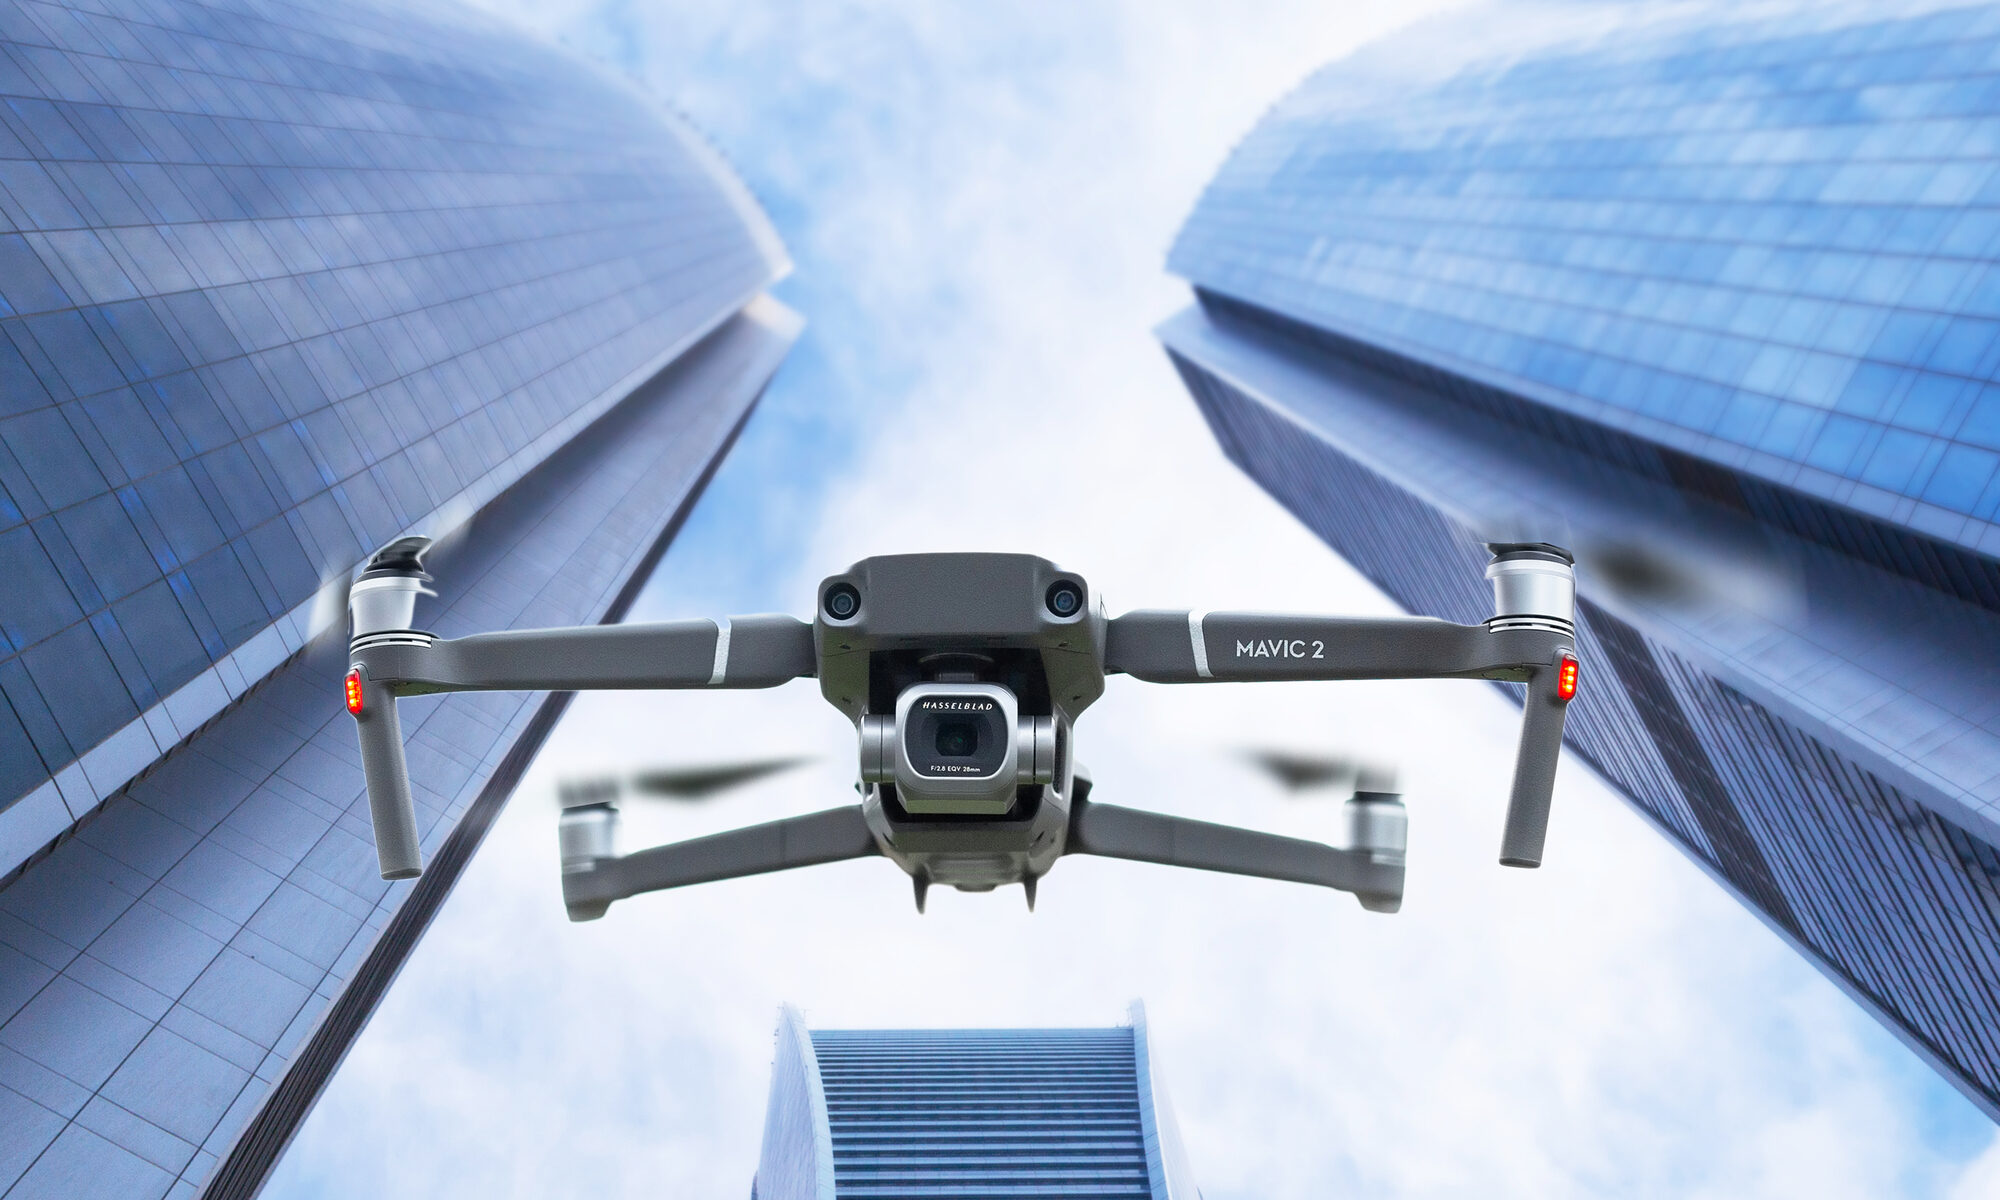 DJI Mavic 2 pro drone with hasselblad camera with skyscraper buildings background.